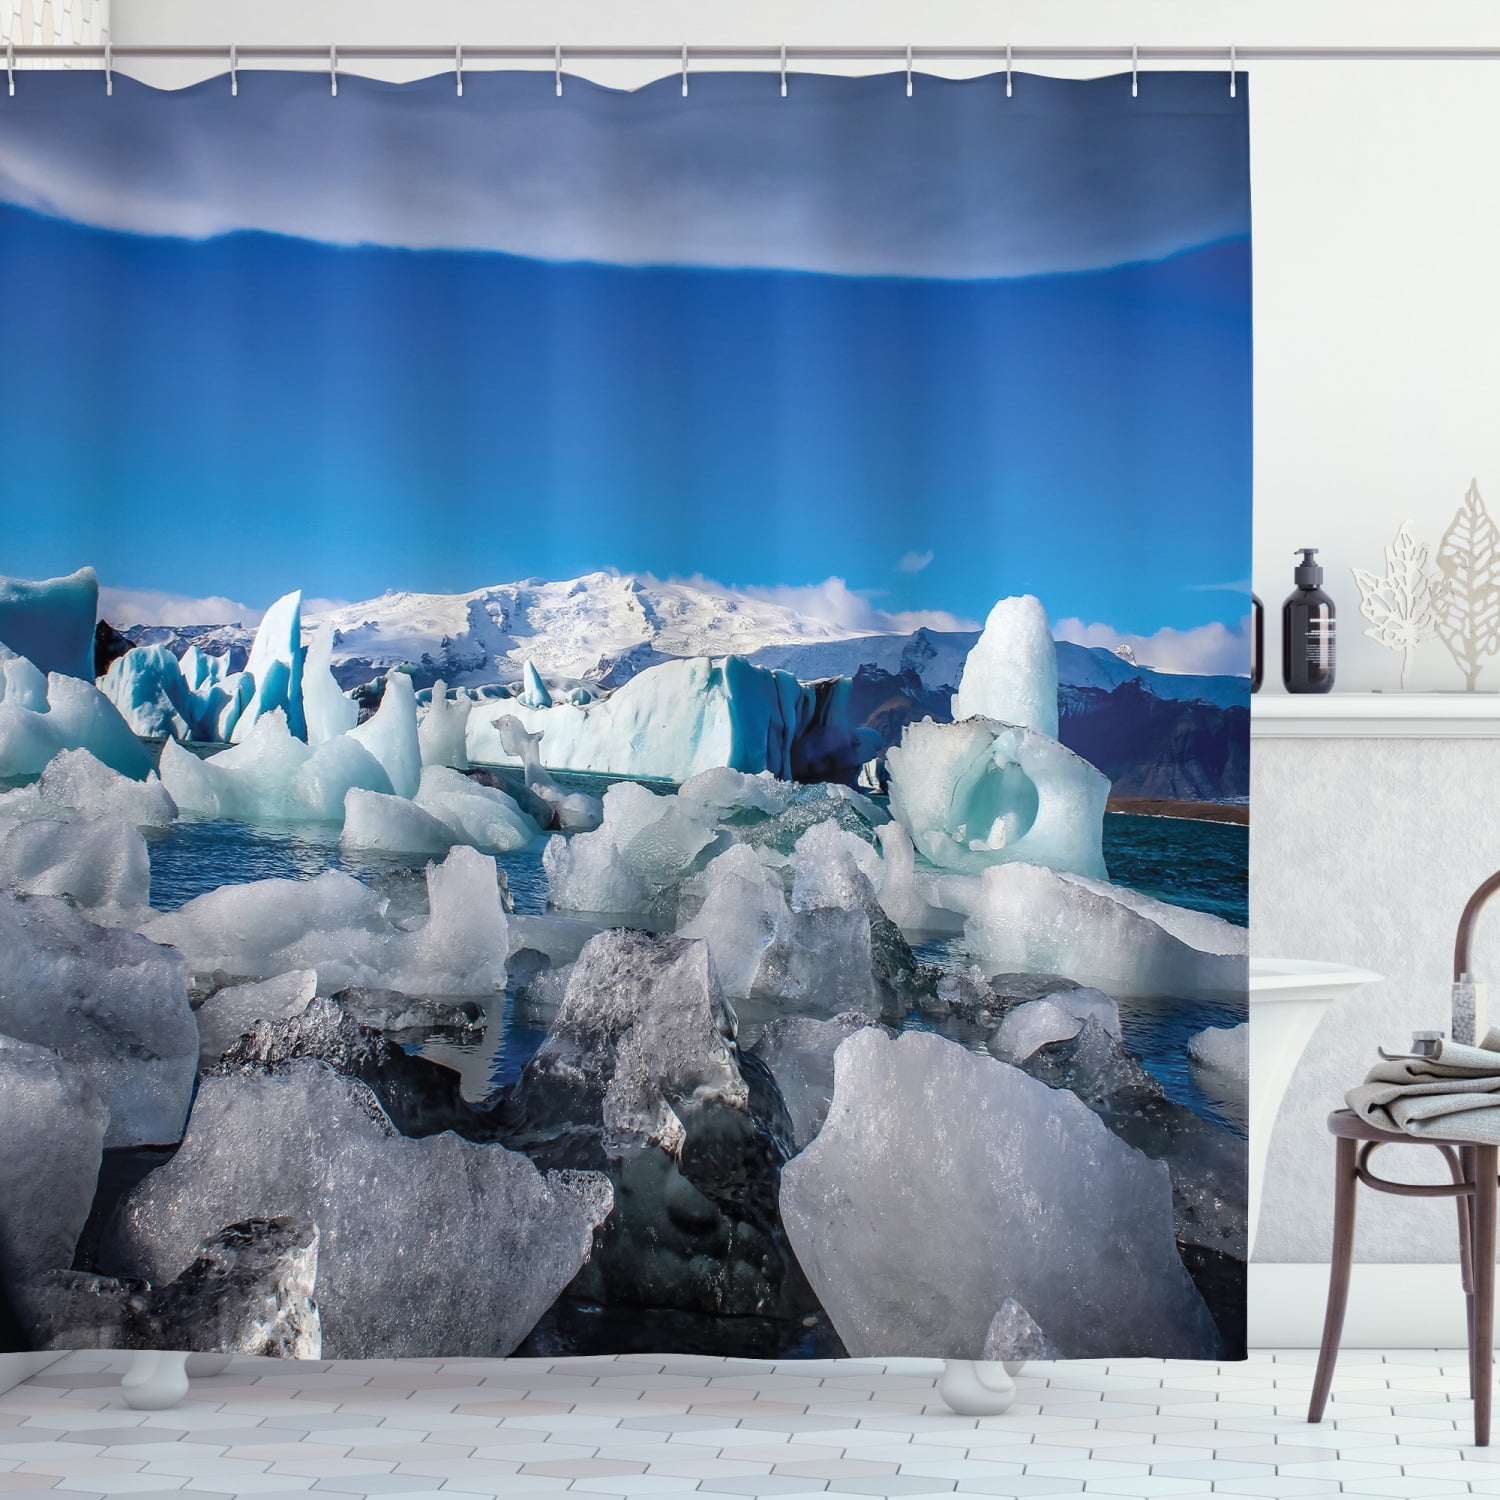 Blue Ice Glacier Fabric Shower Curtain Liner Bathroom Mat Home Decor & 12 Hooks 